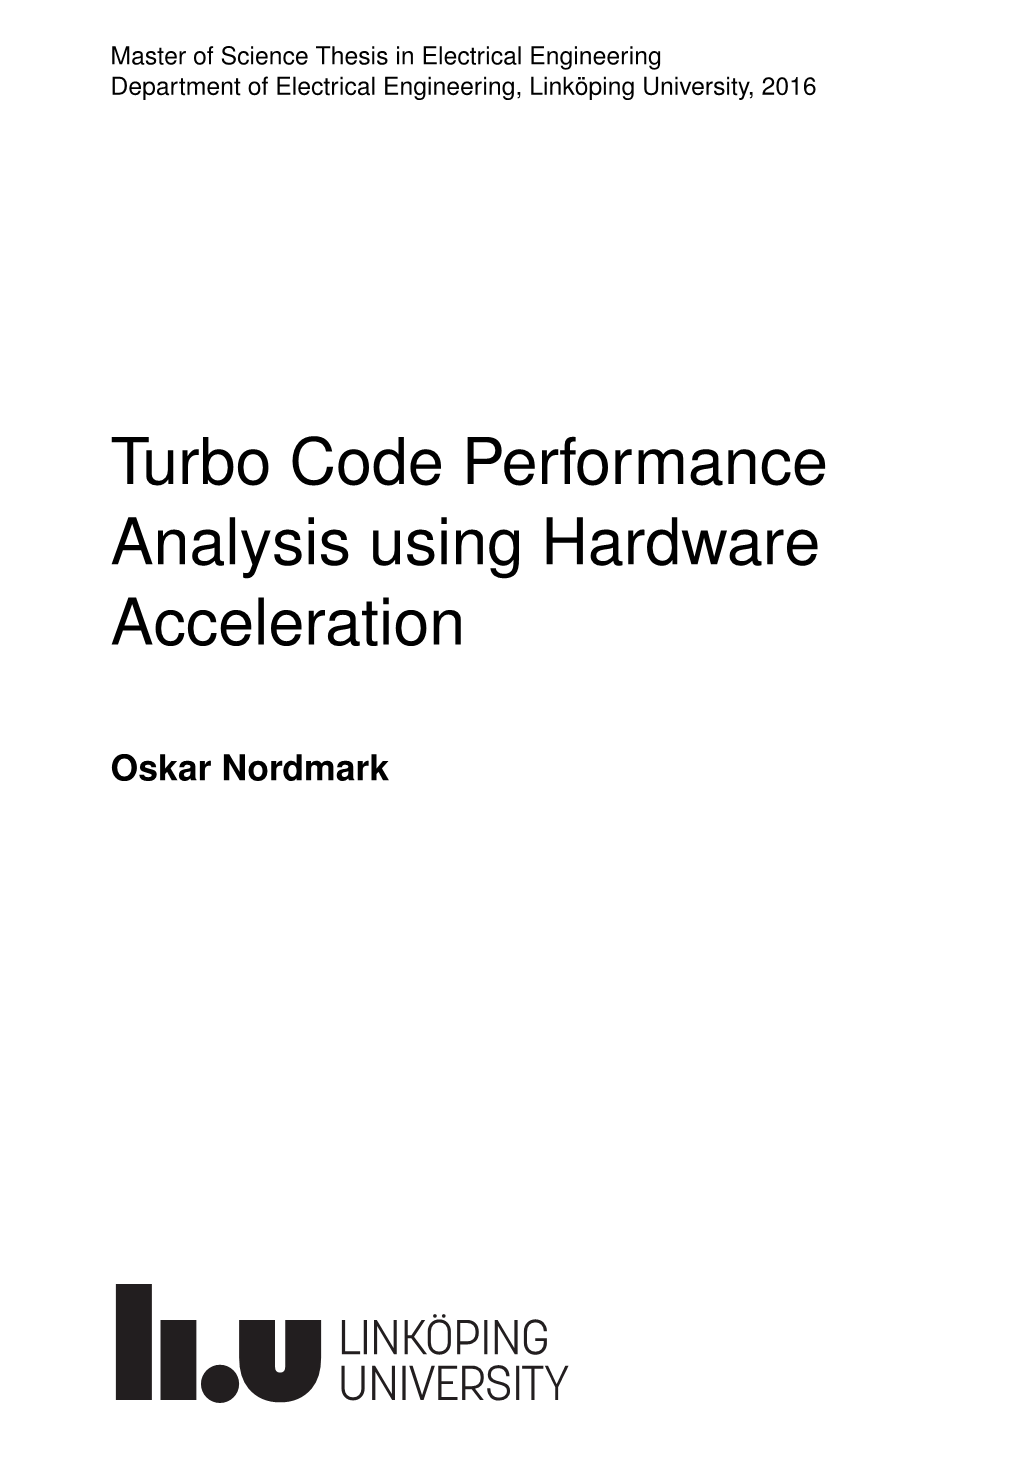 Turbo Code Performance Analysis Using Hardware Acceleration